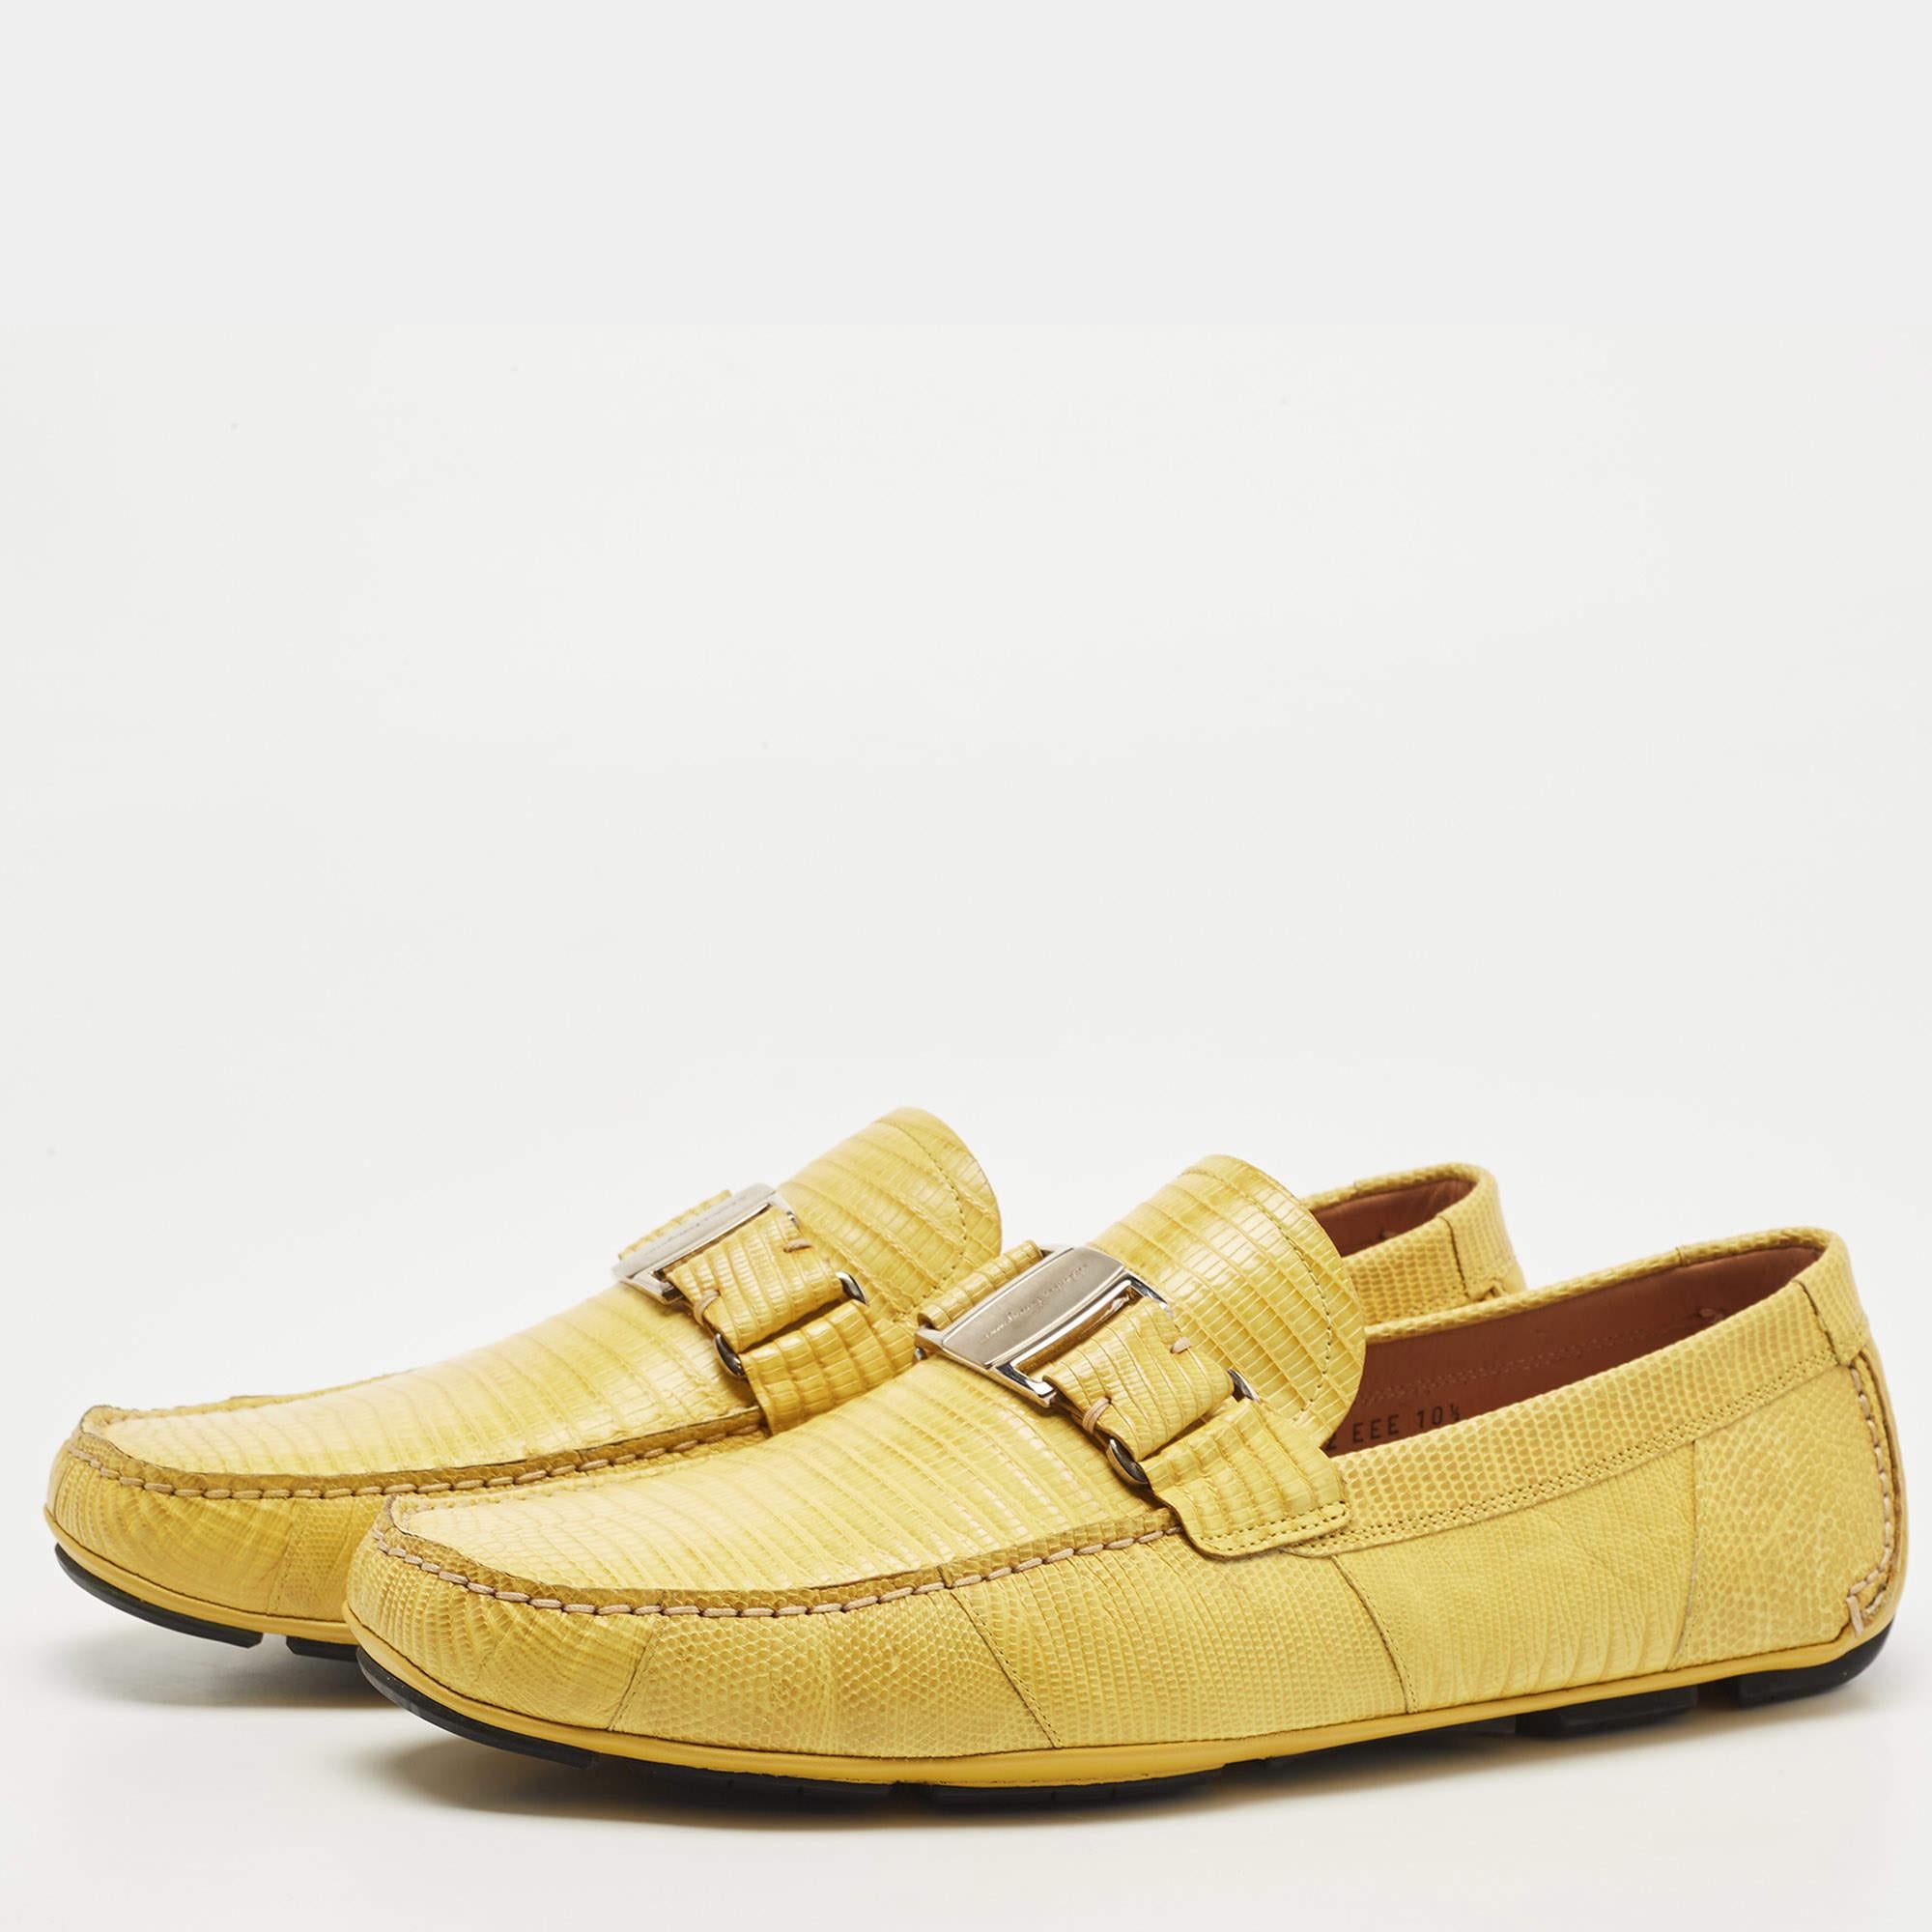 Salvatore Ferragamo Yellow Lizard Sardegna Loafers Size 44.5 1